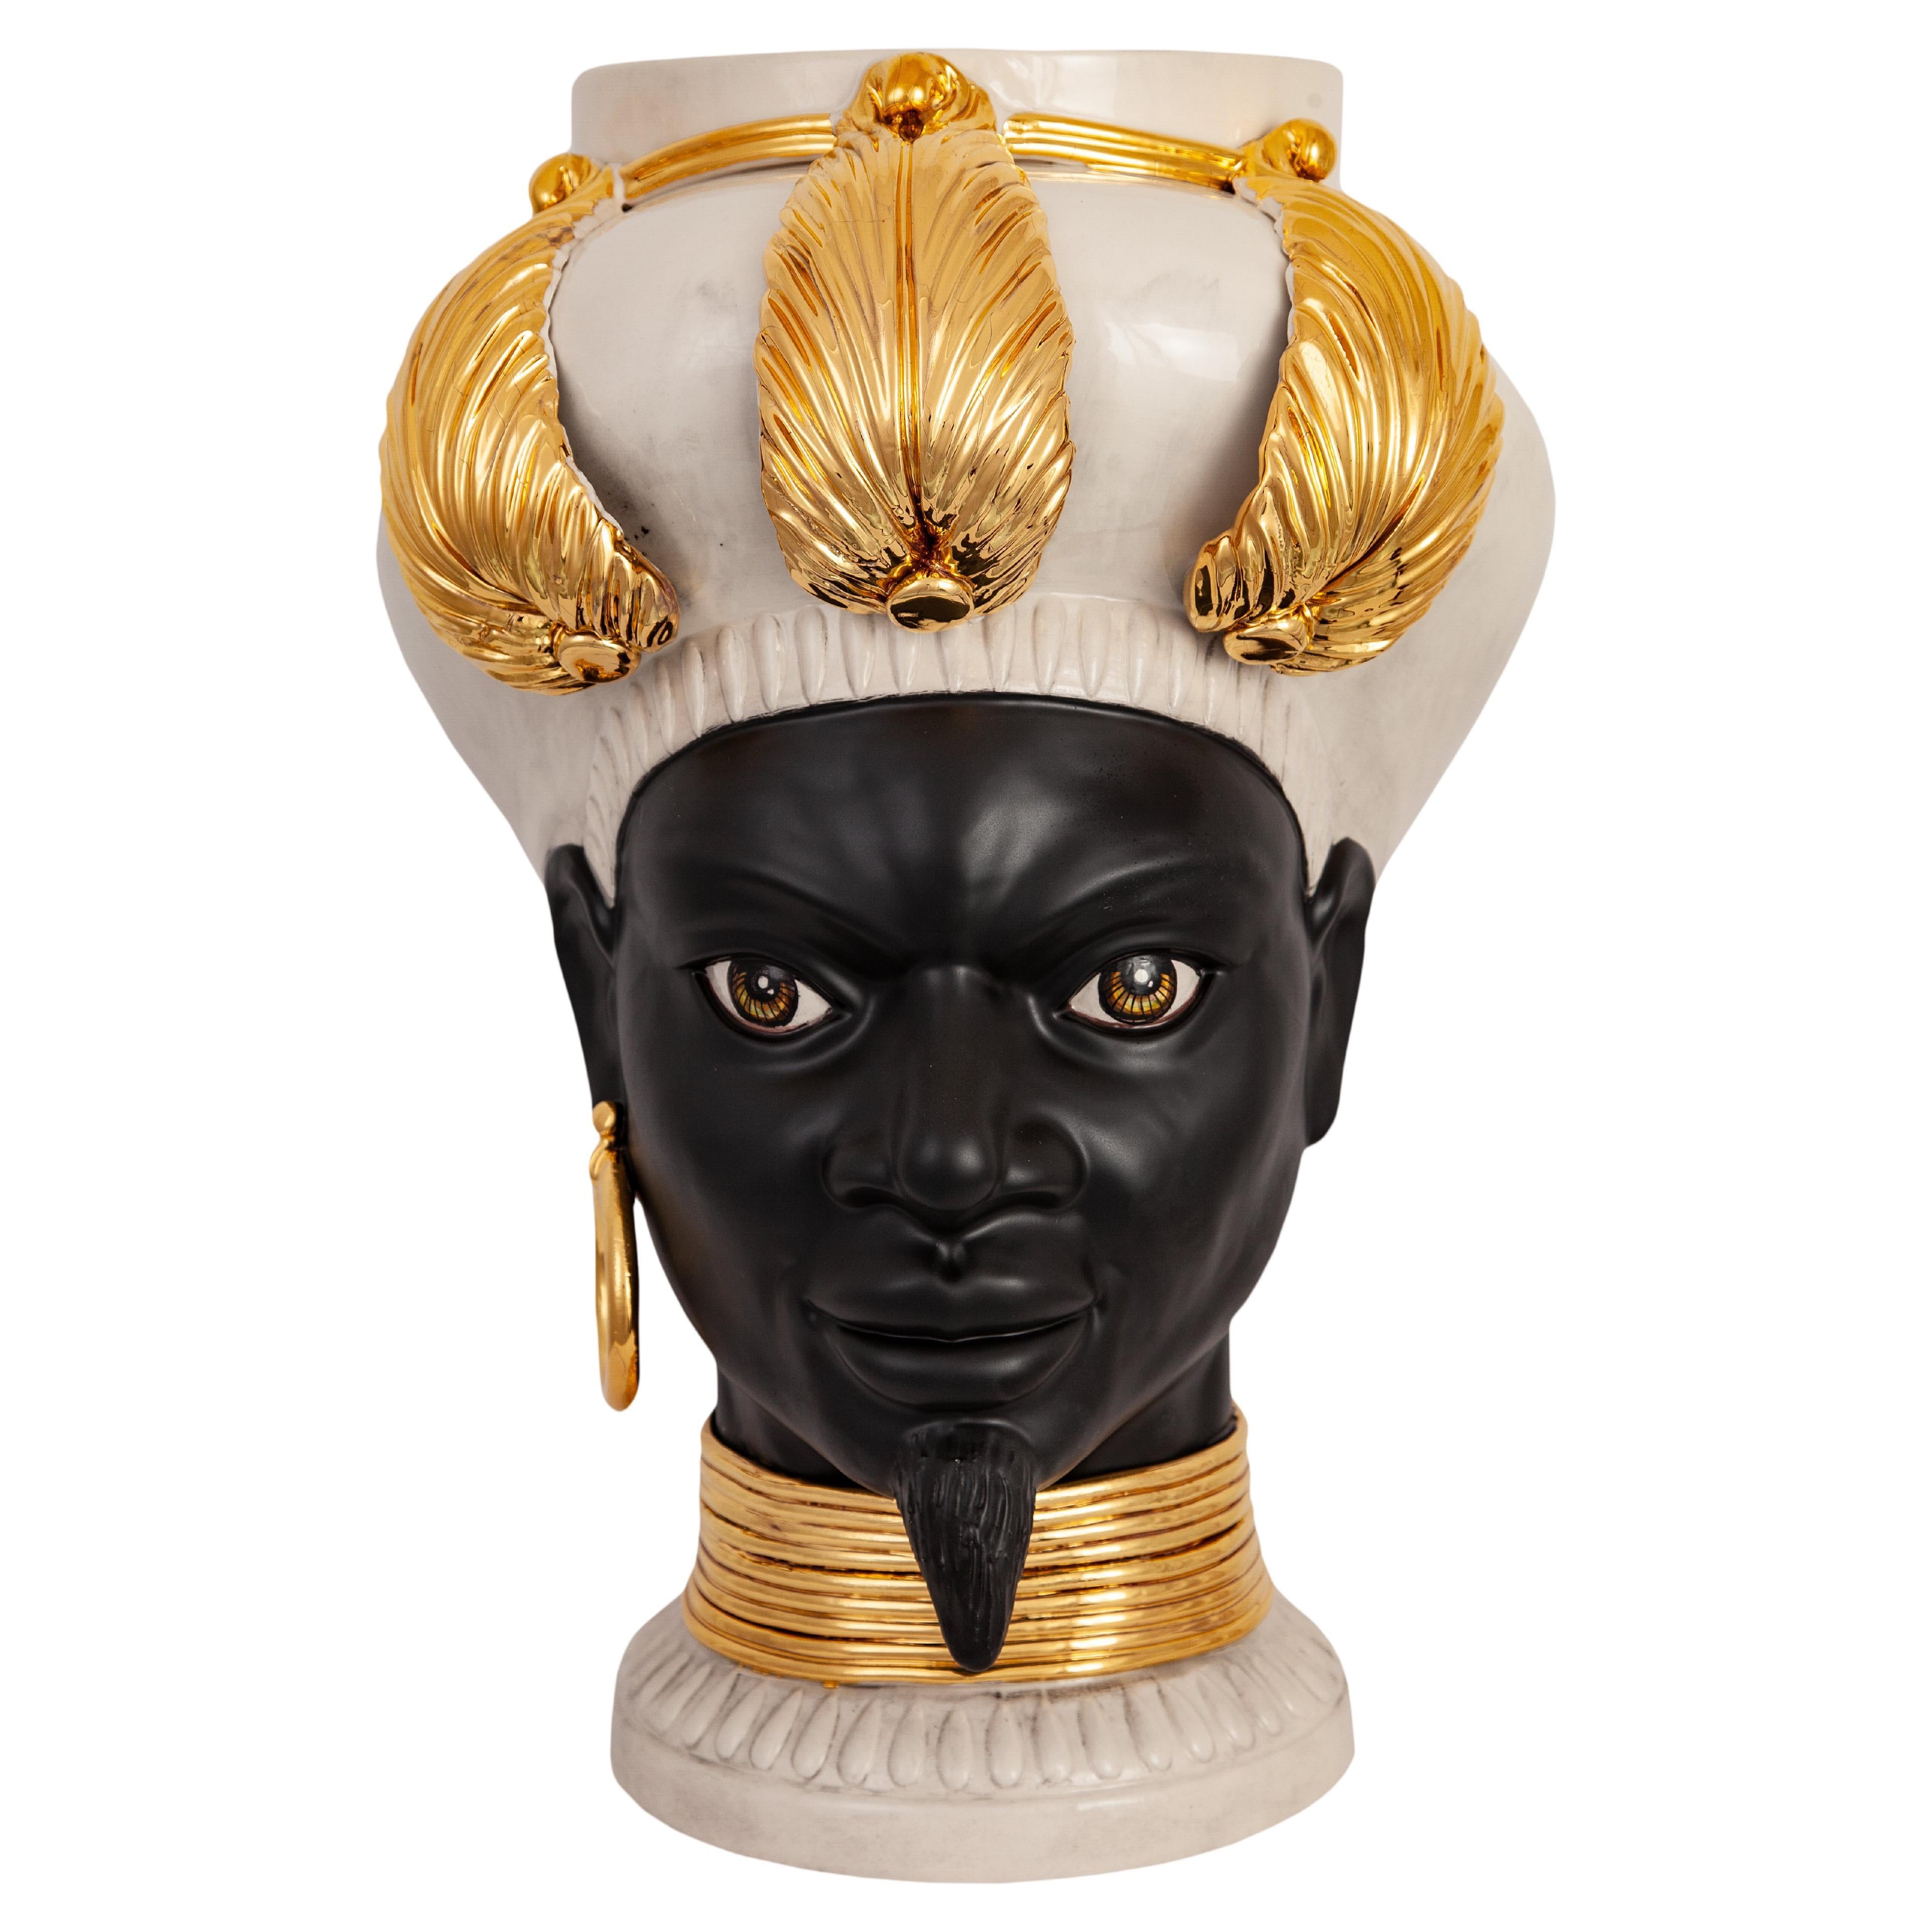 ISIDE I21, Man's Moorish Head, Handmade in Sicily, 2021, Golden, Size L For Sale